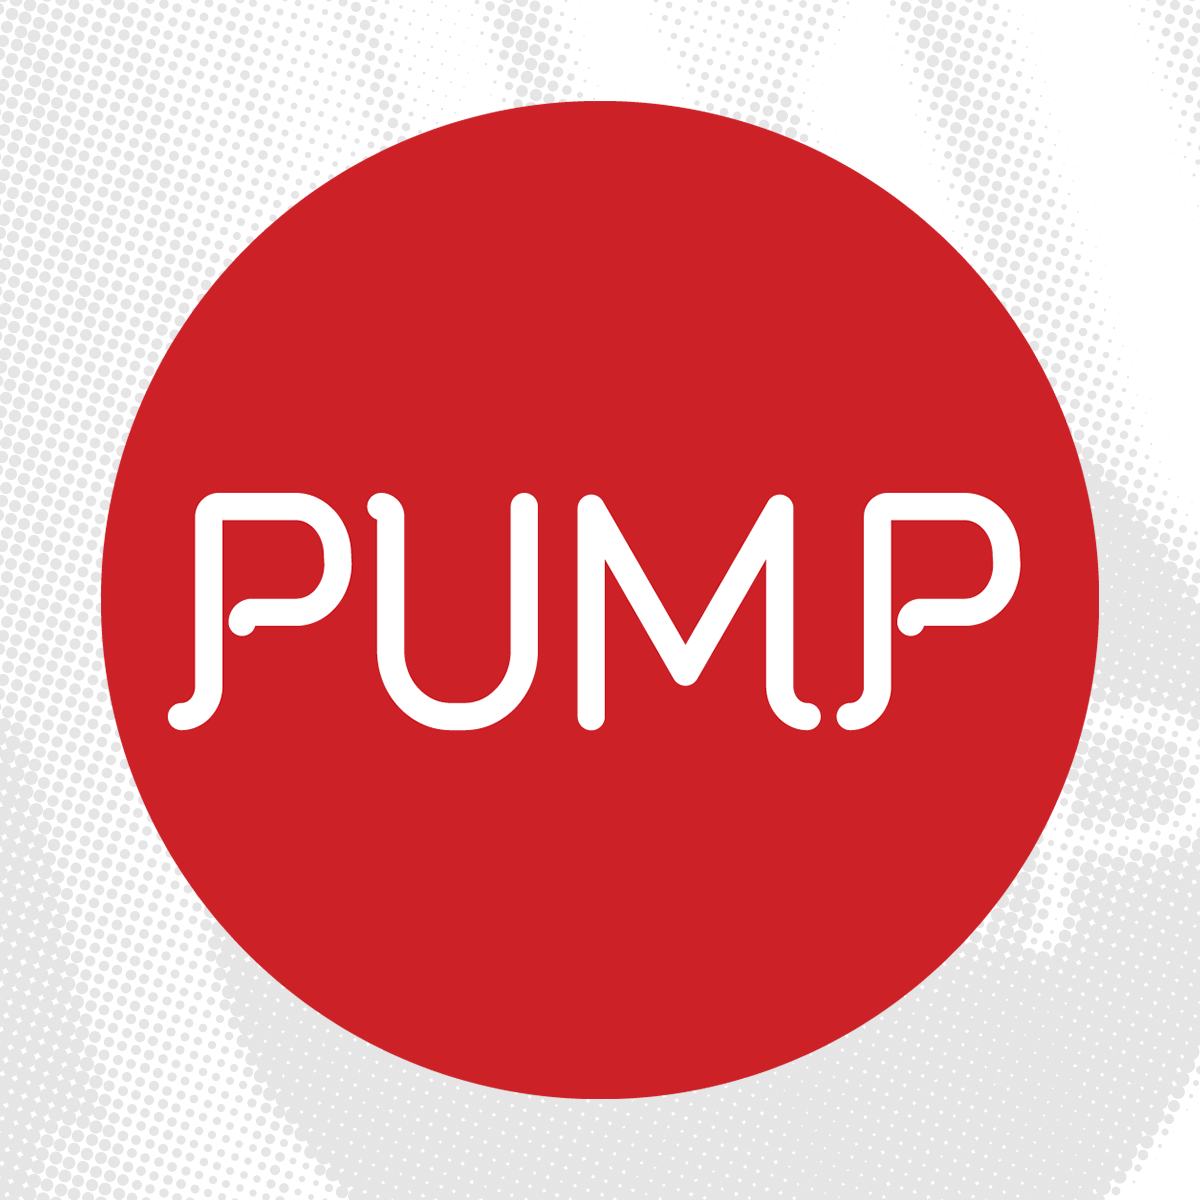 Pump Logo - Industry-leading Web Design & Digital Marketing - Pump Interactive